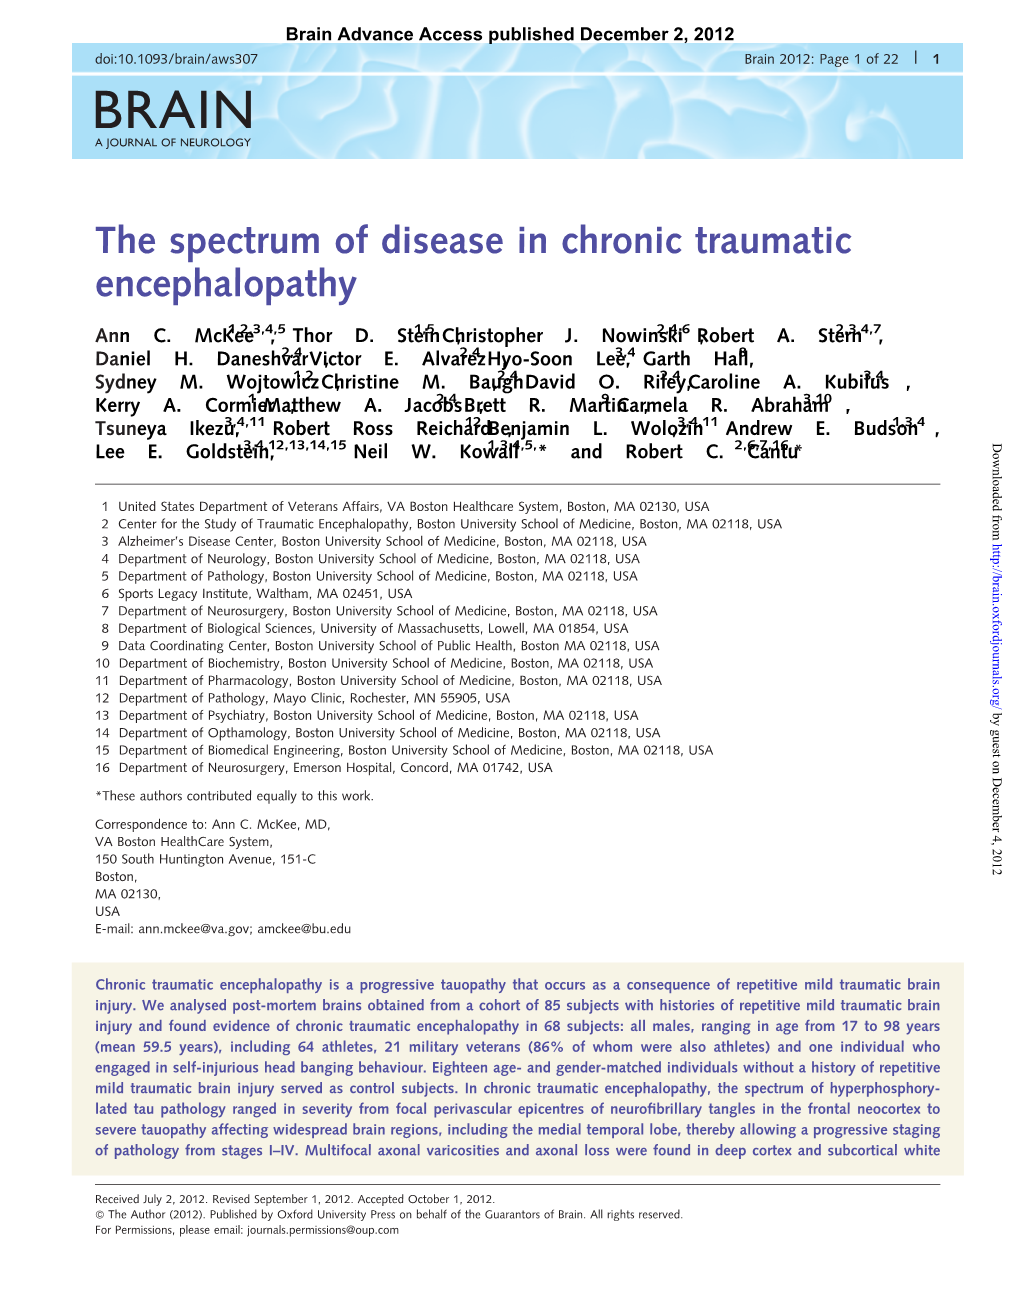 The Spectrum of Disease in Chronic Traumatic Encephalopathy